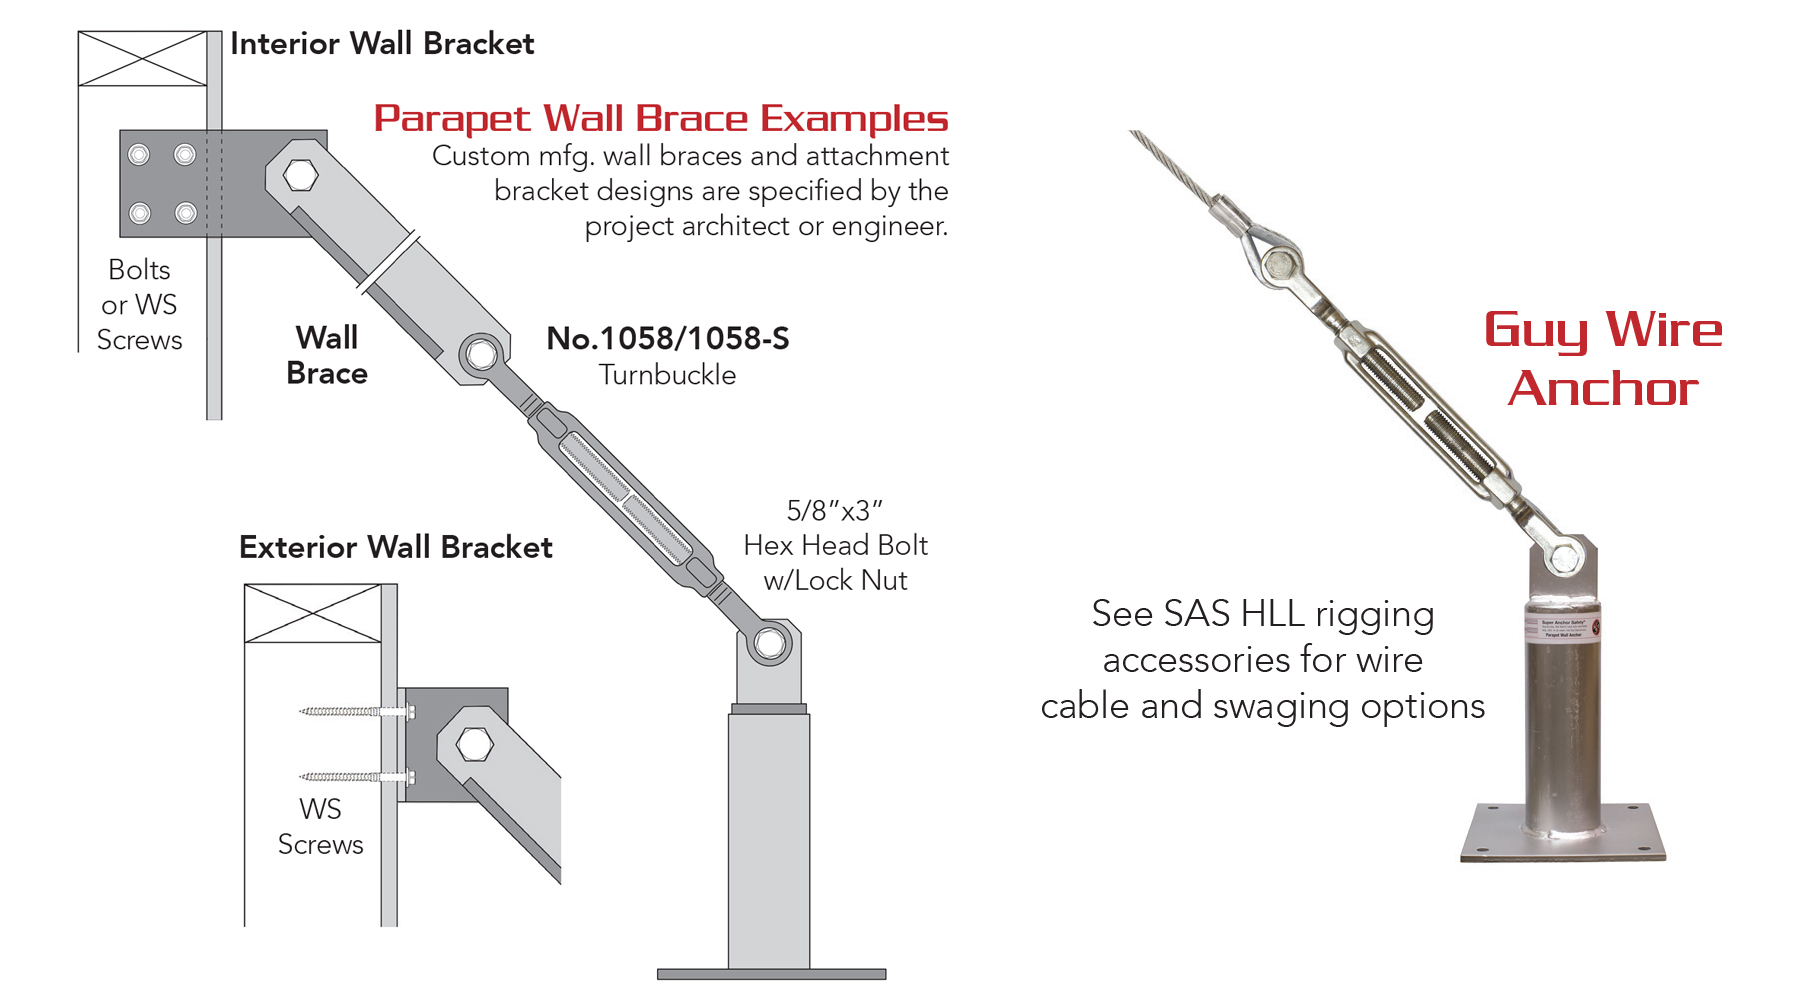 CRA Utility/Parapet/Wall Brace Anchors